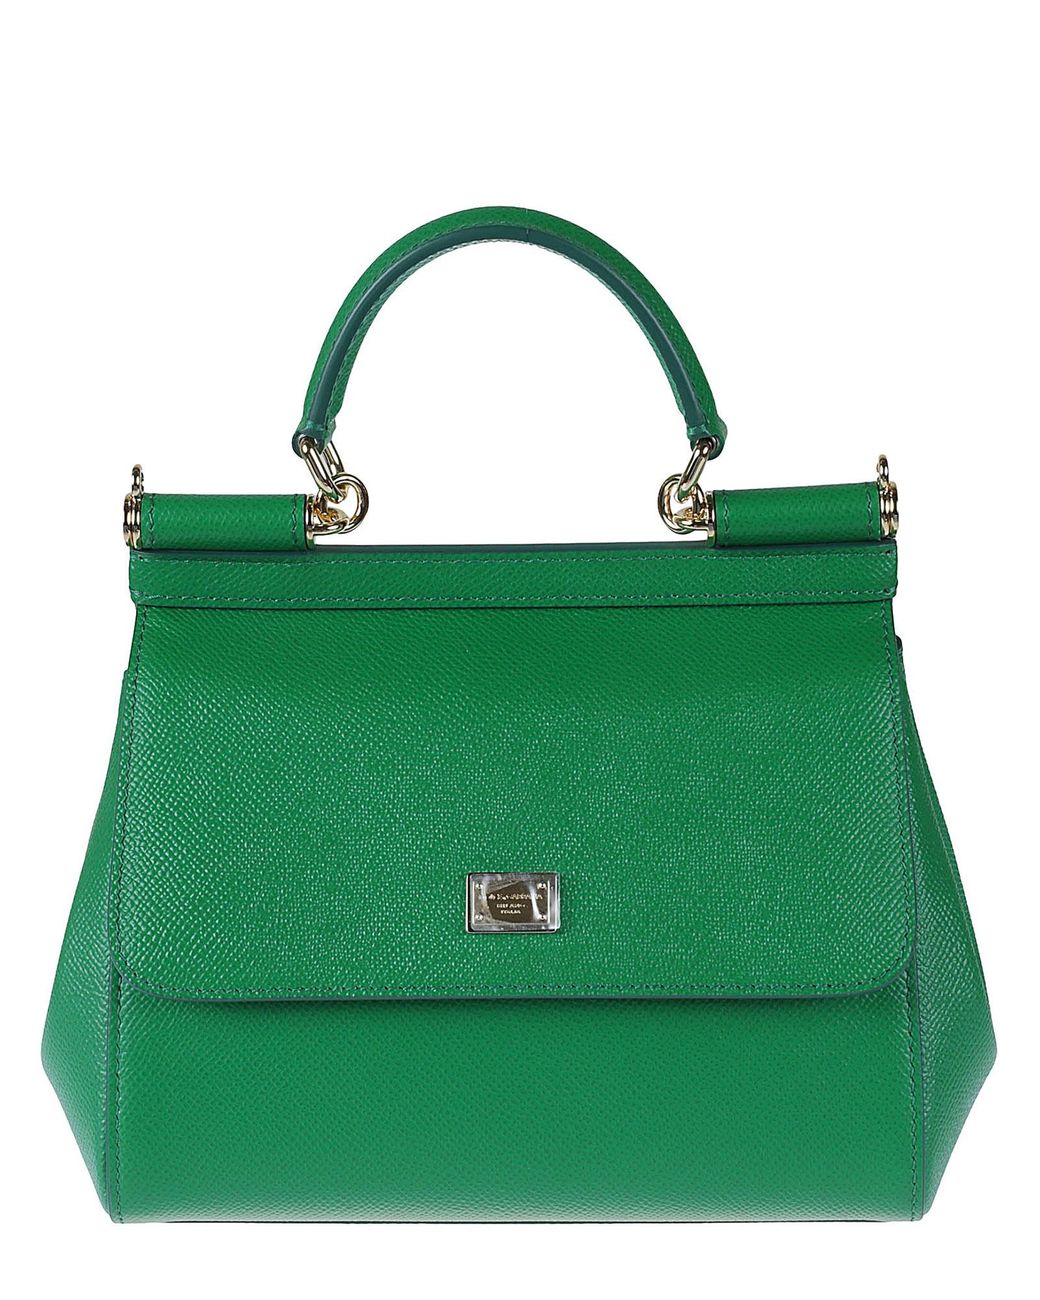 Dolce & Gabbana Sicily Handbag in Green | Lyst